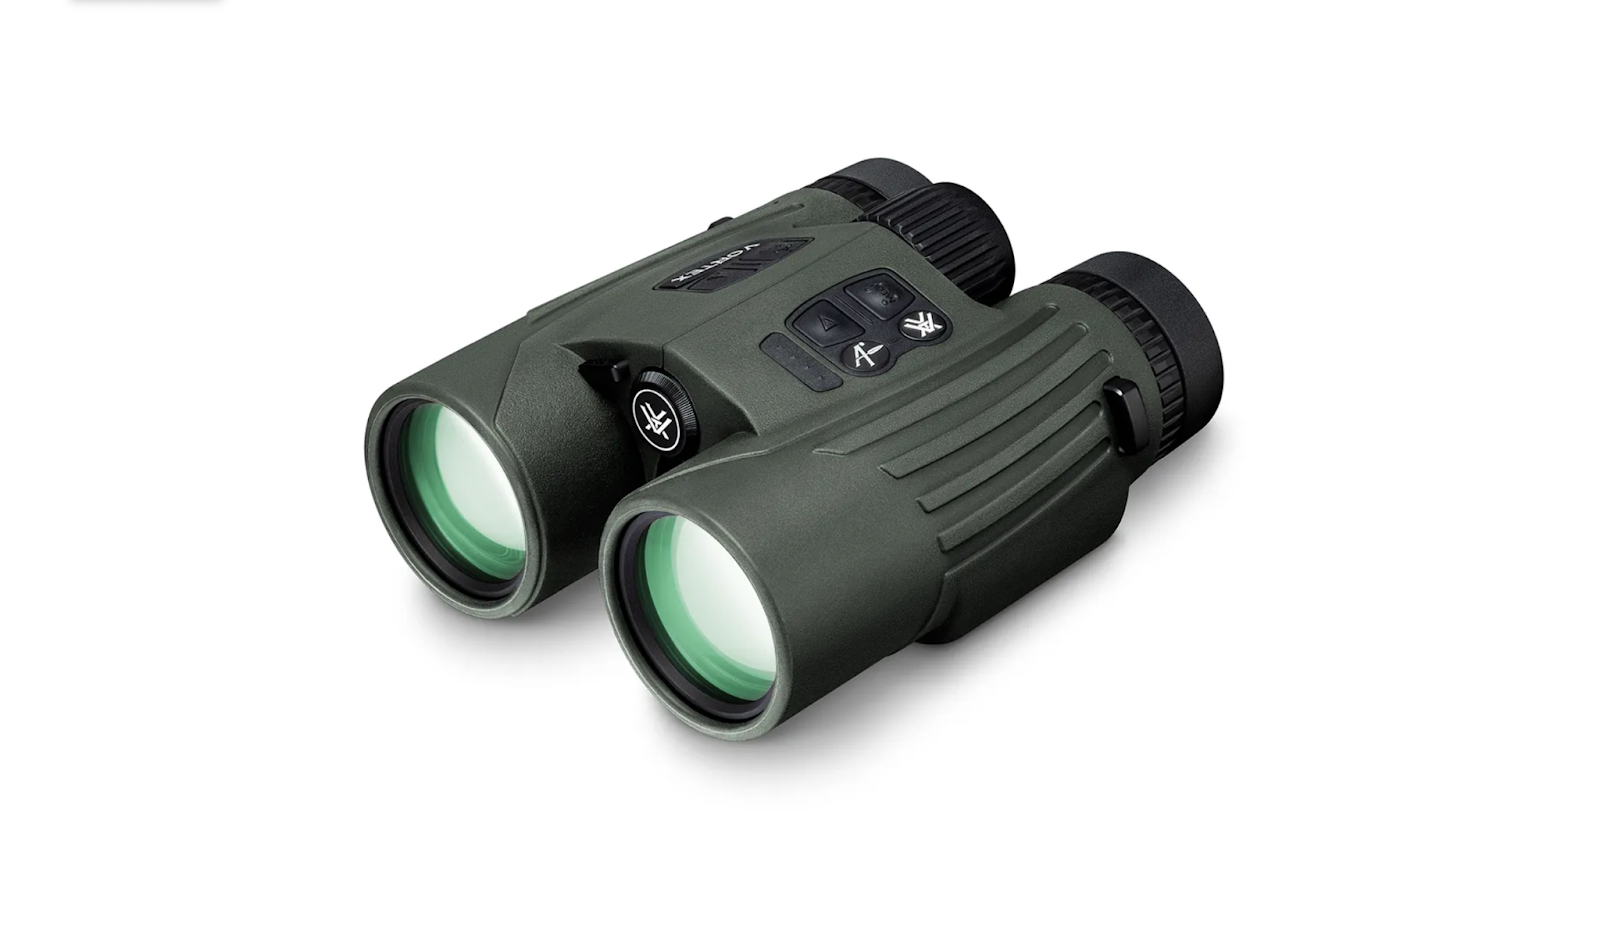 Vortex Fury HD binoculars are a versatile rangefinding optic.